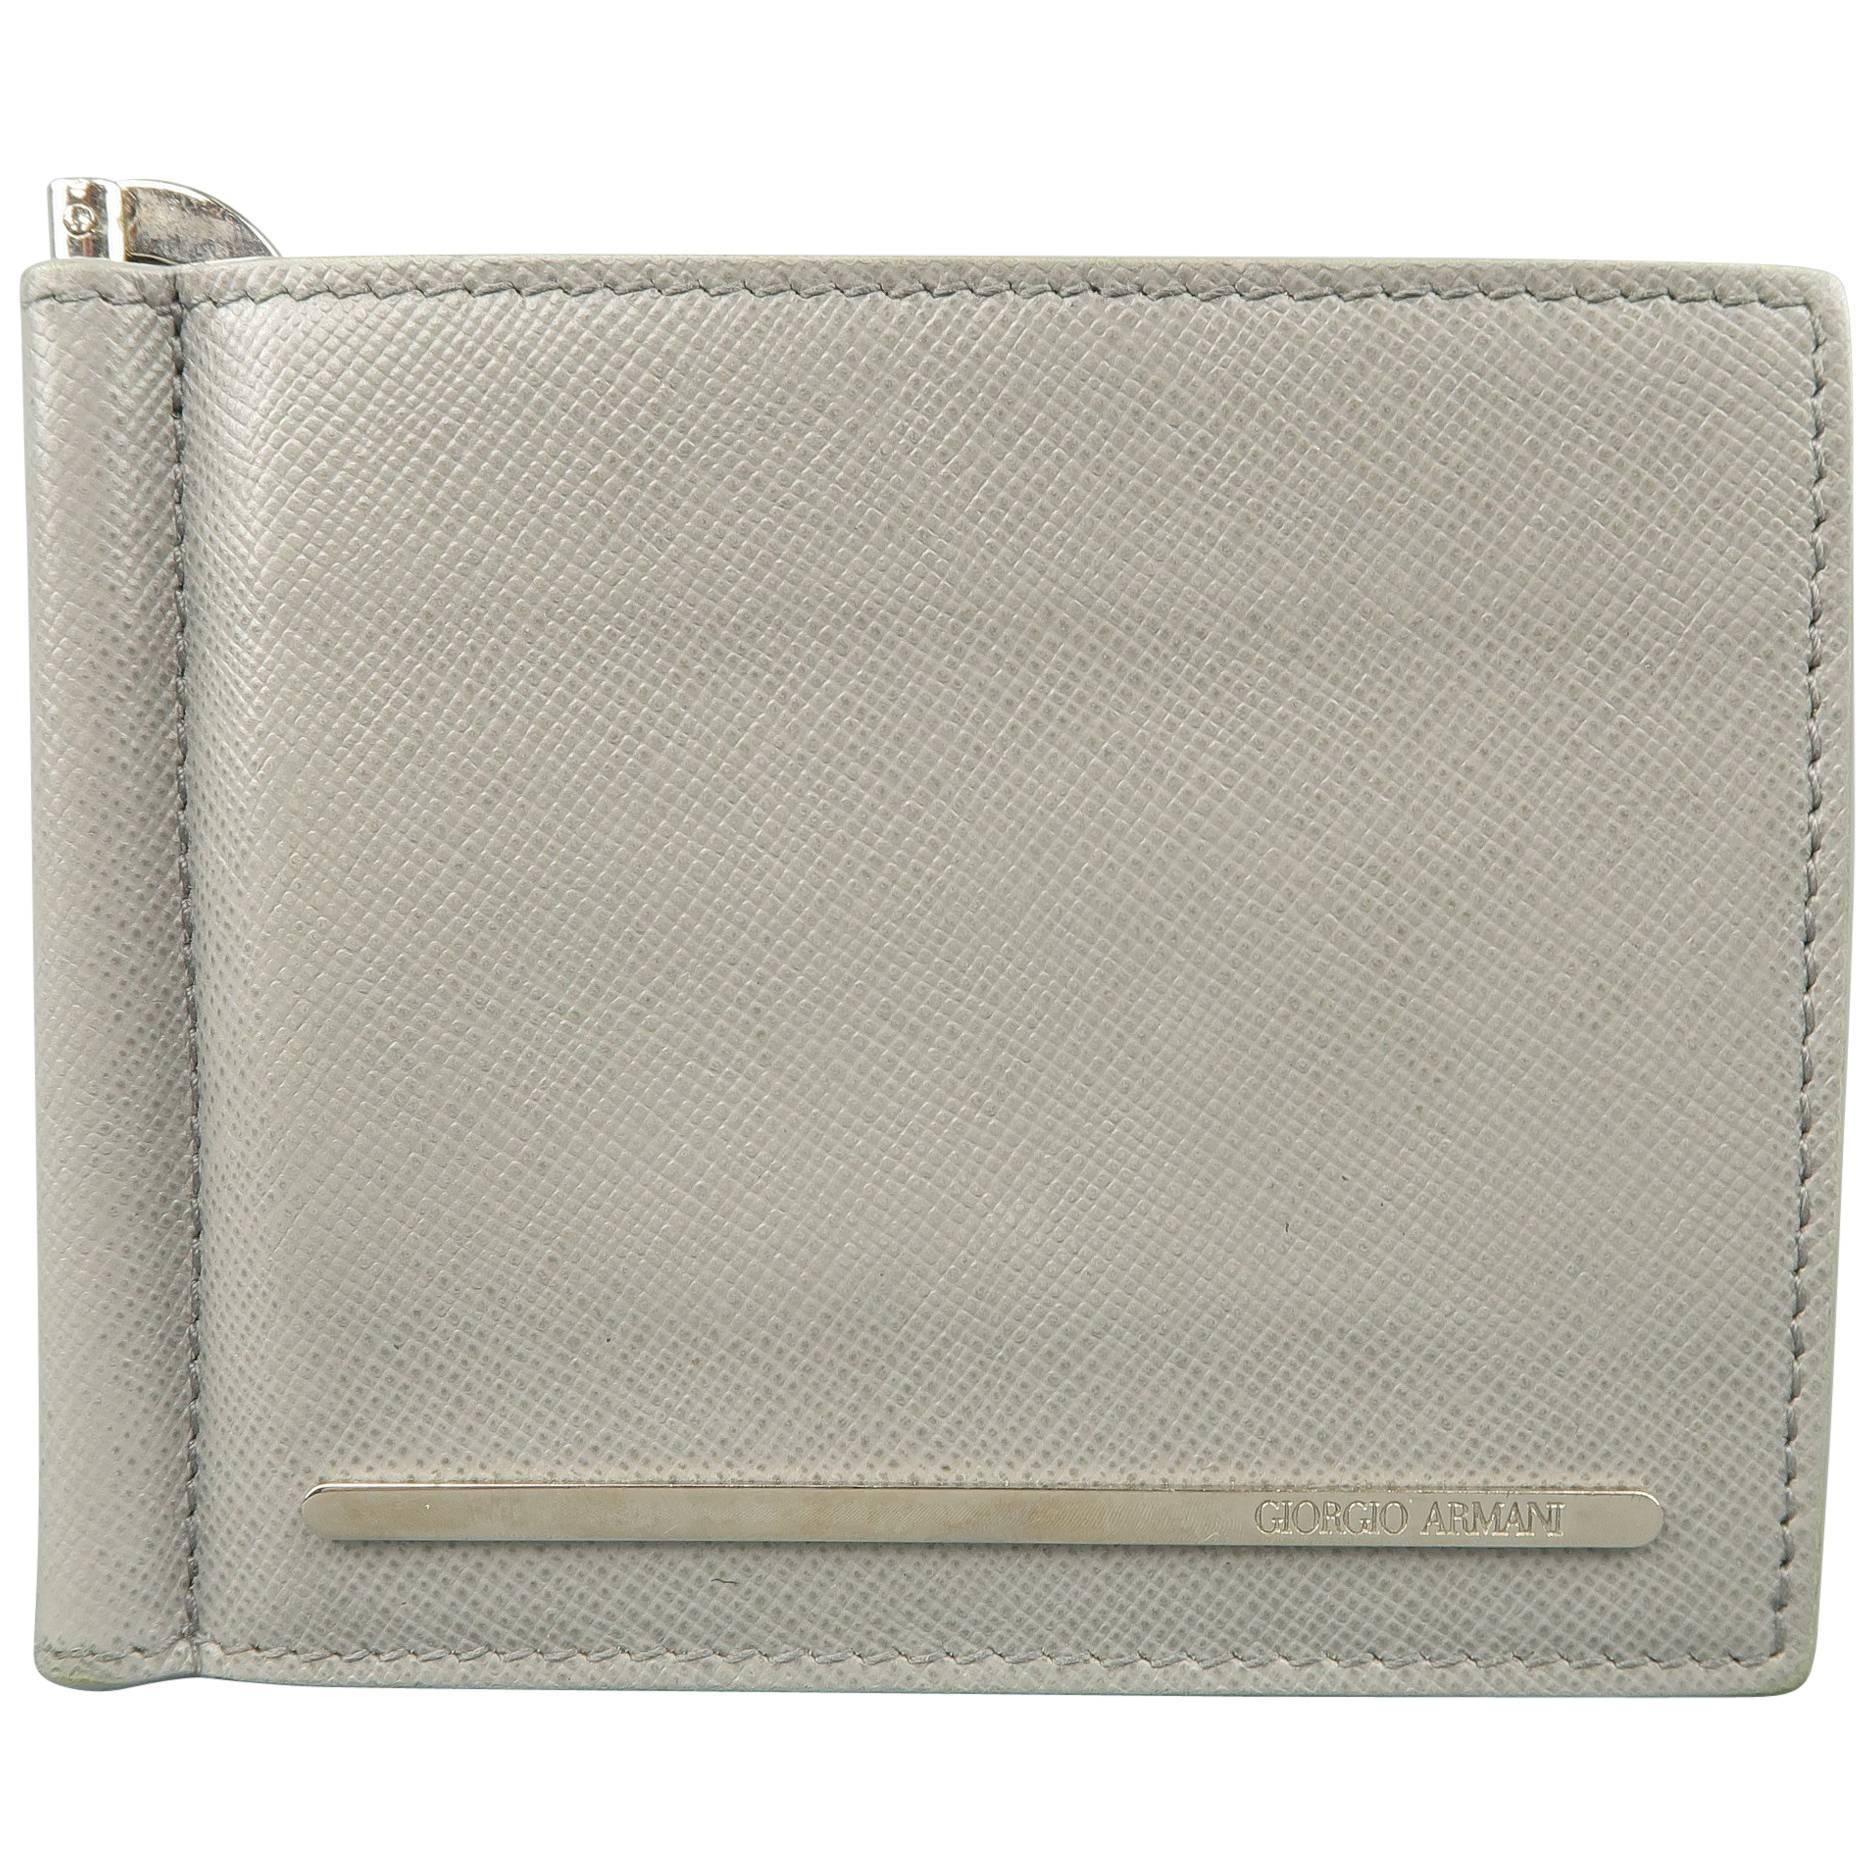 Giorgio Armani Men's Light Gray Textured Leather Money Clip Bifold Wallet